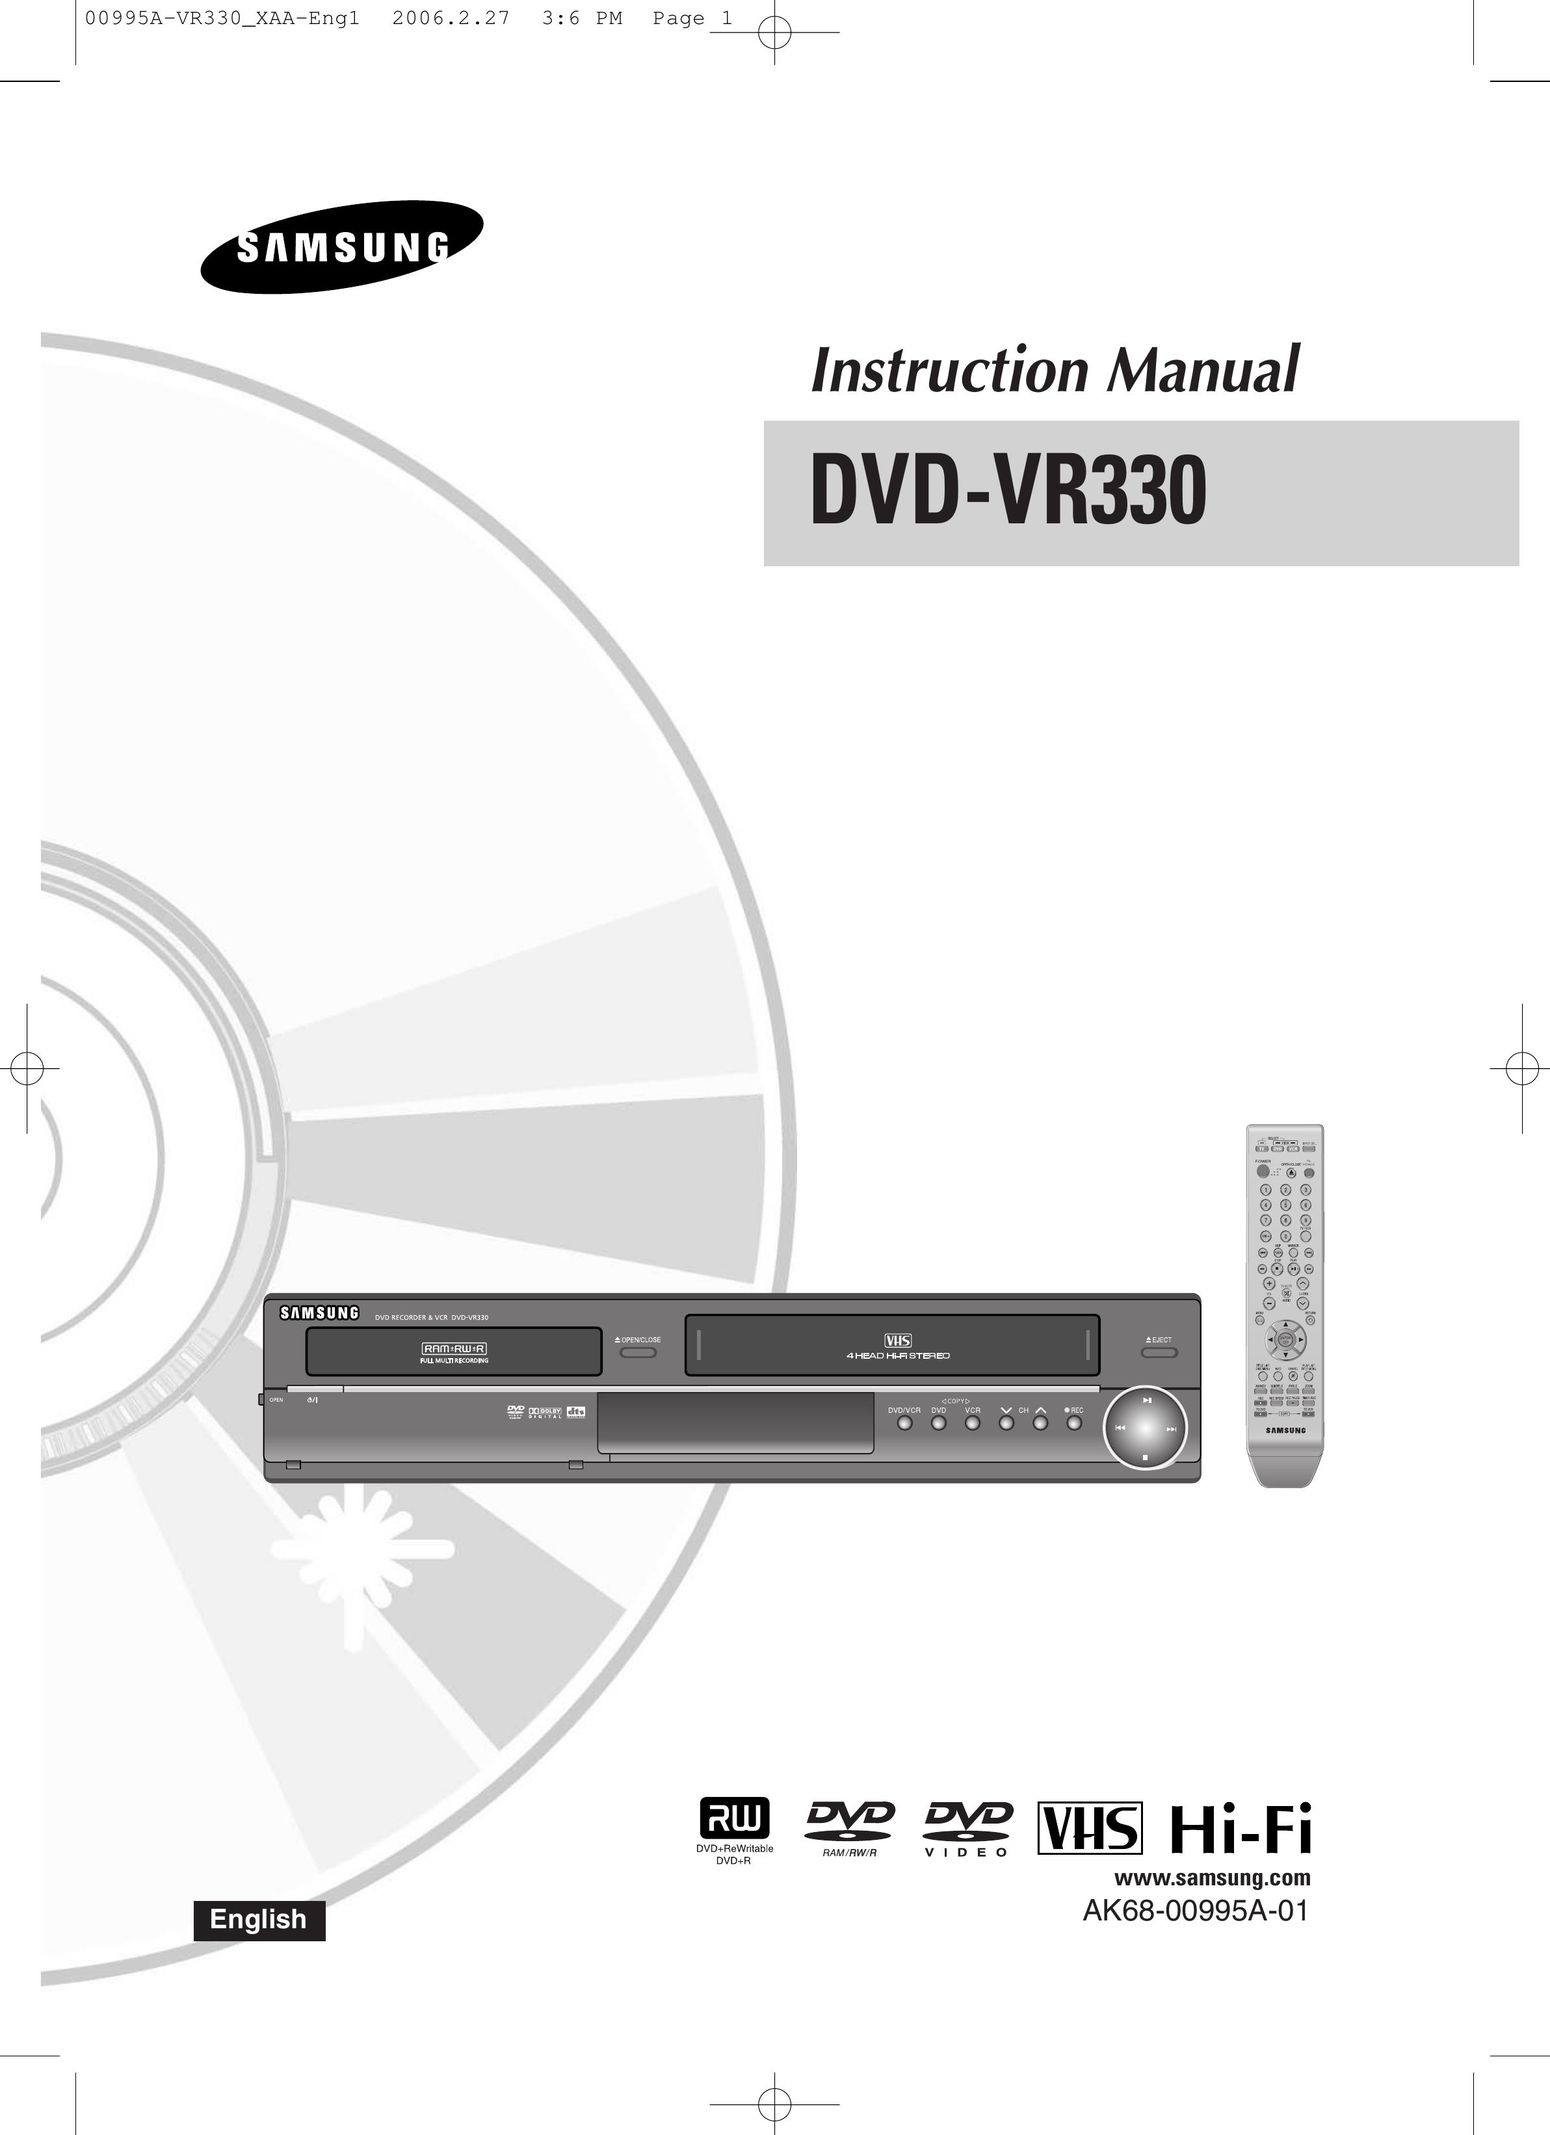 Samsung DVD-VR330 MP3 Player User Manual